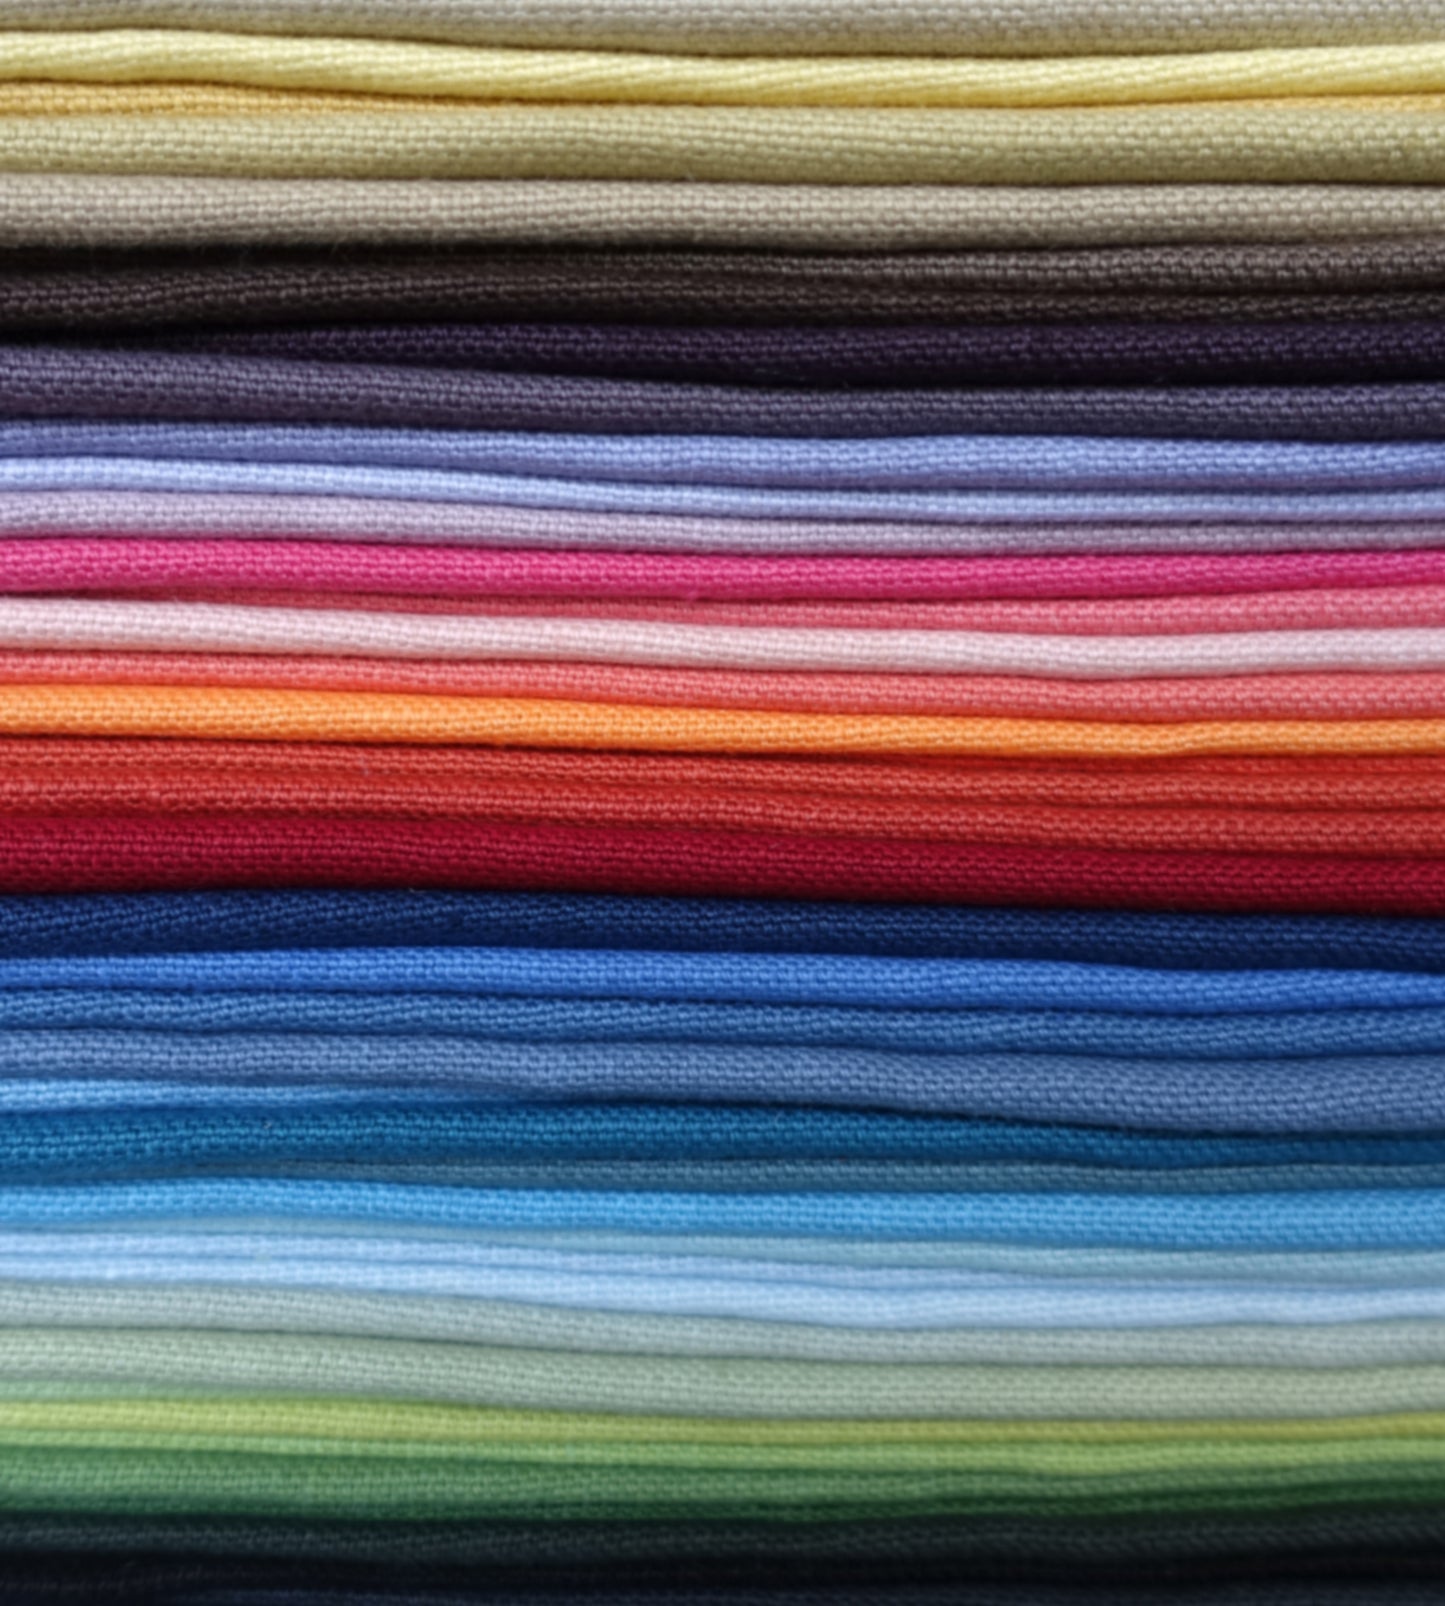 Purchase Scalamandre Fabric Pattern number SC 005927108, Toscana Linen Bluestone 2